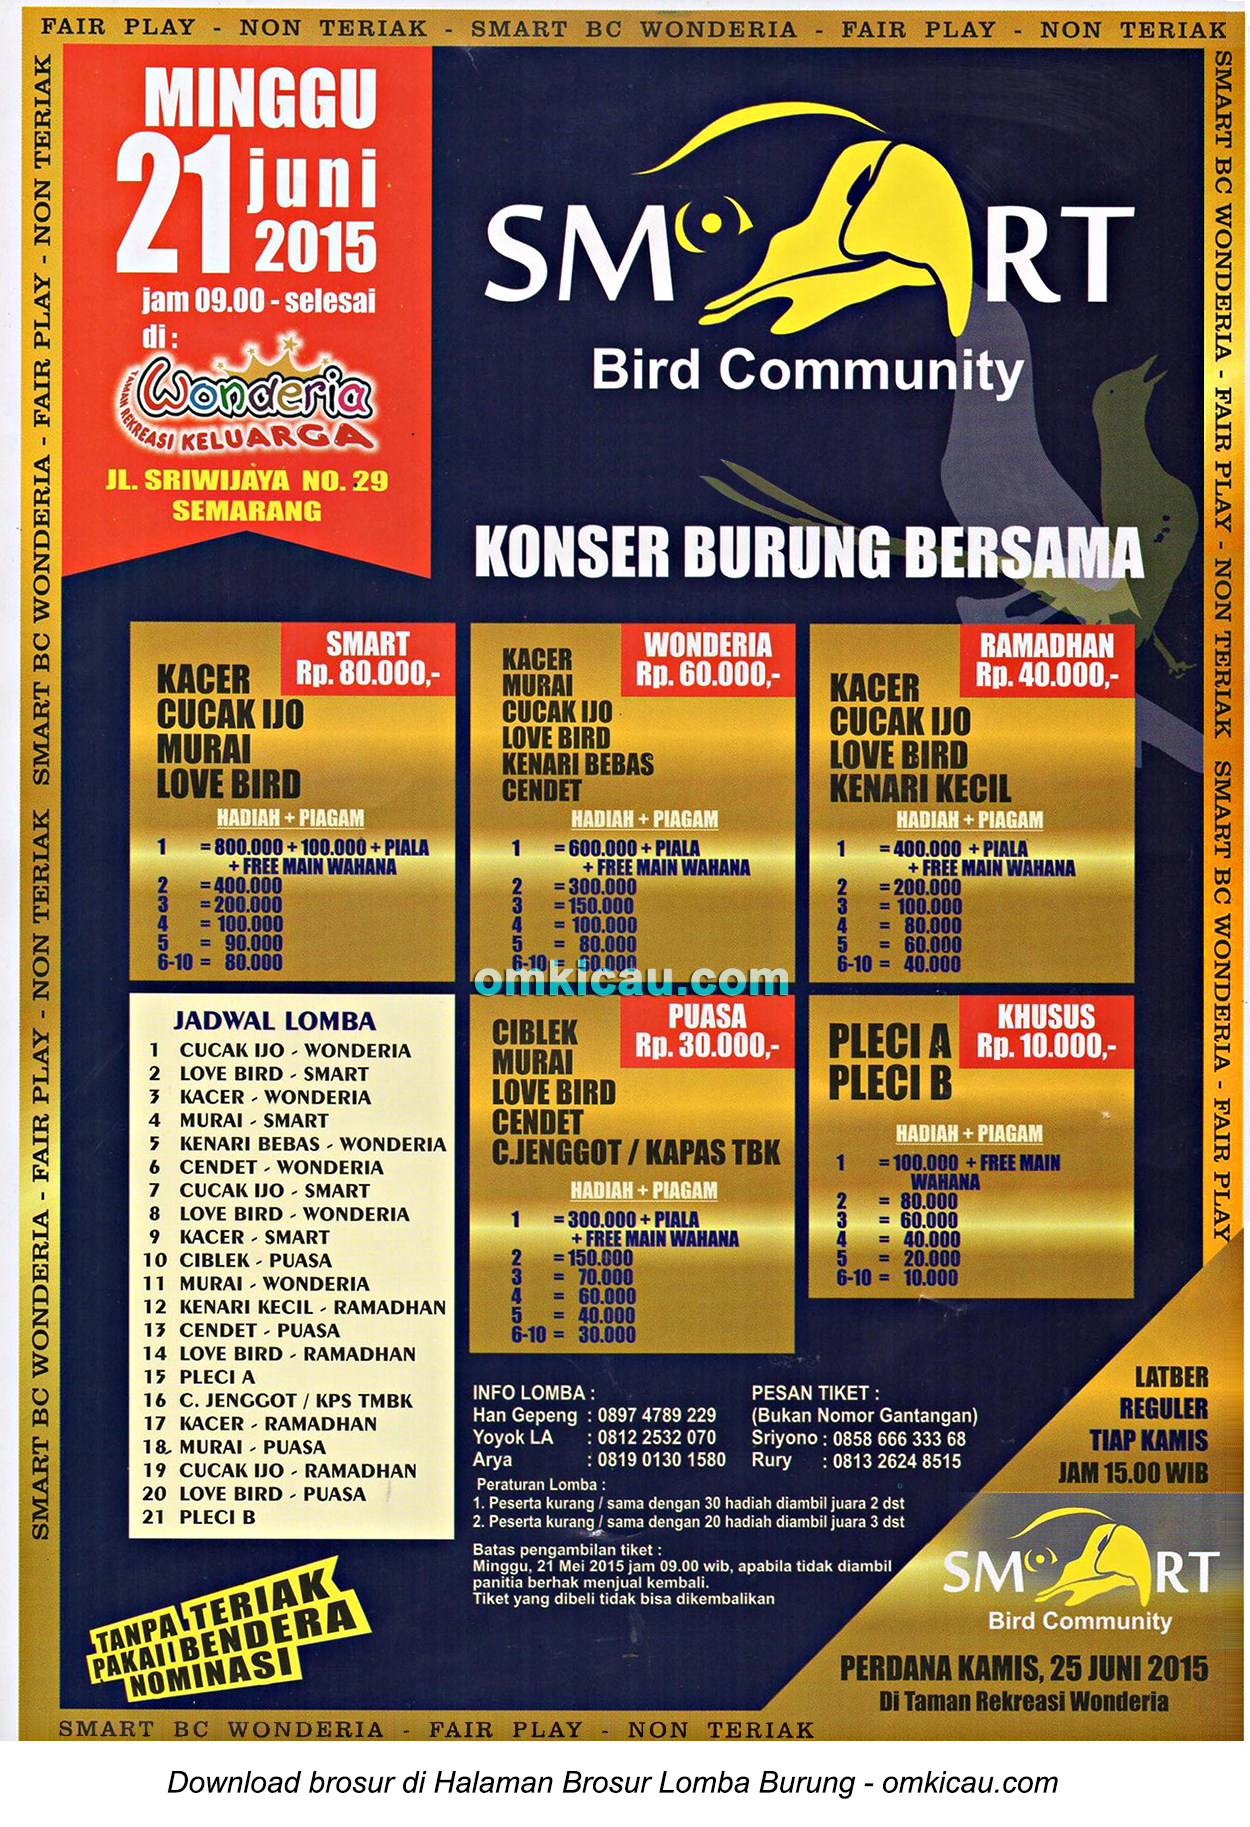 Brosur Konser Burung Bersama Smart Bird Community, Semarang, 21 Juni 2015